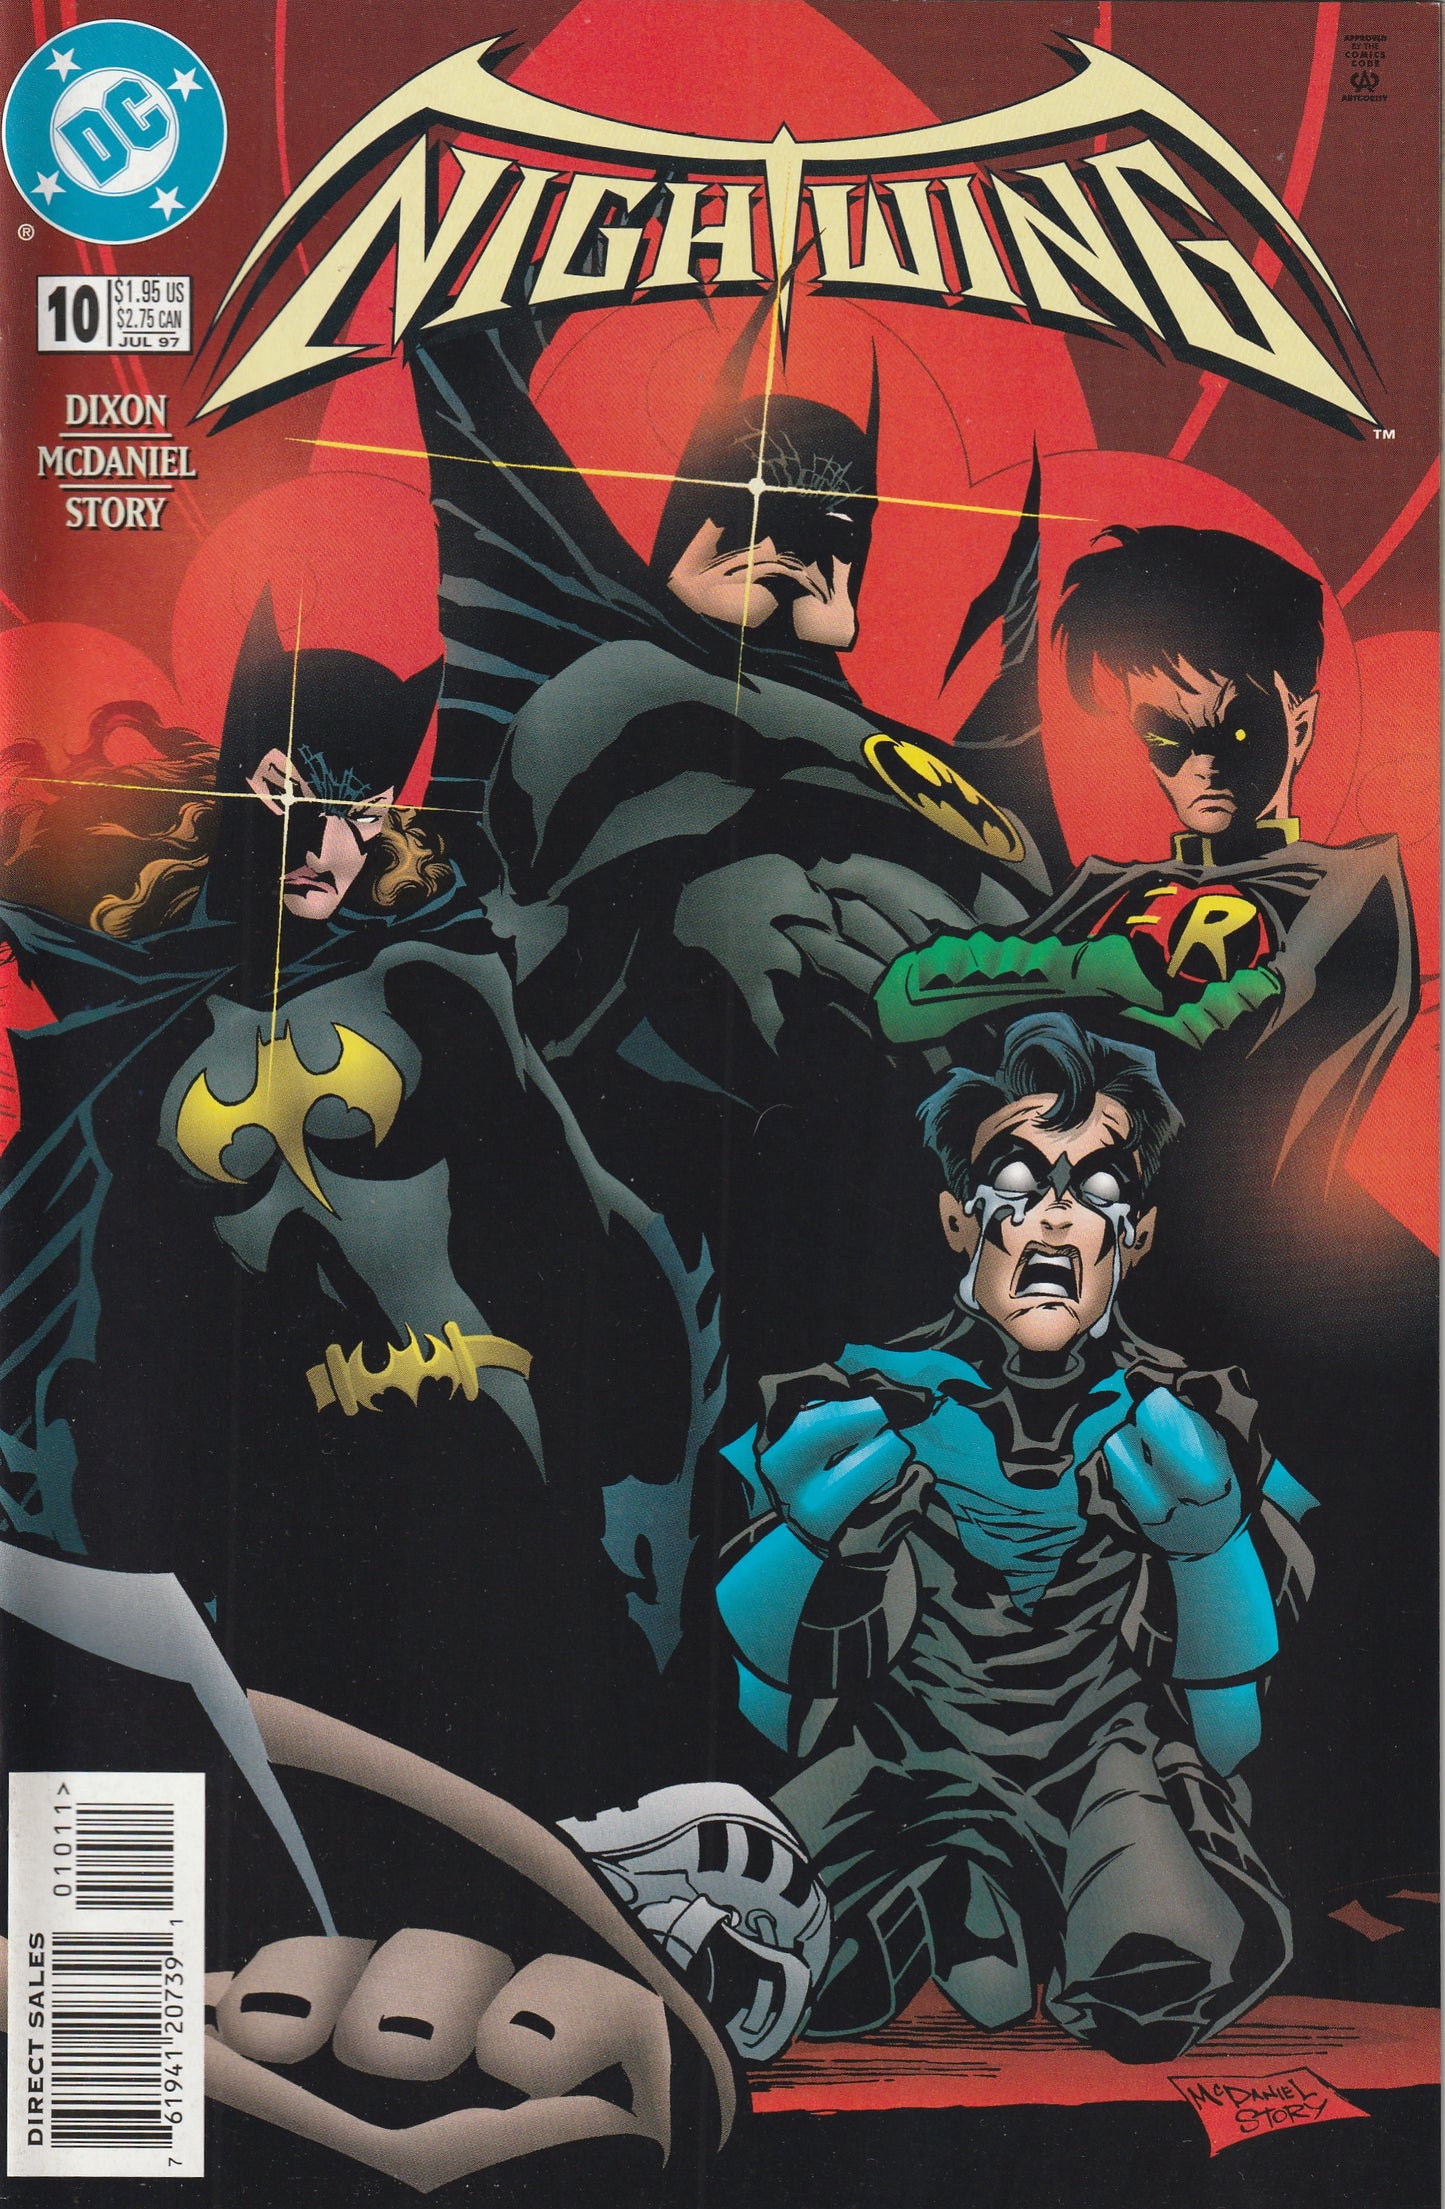 Nightwing #10 (1997)